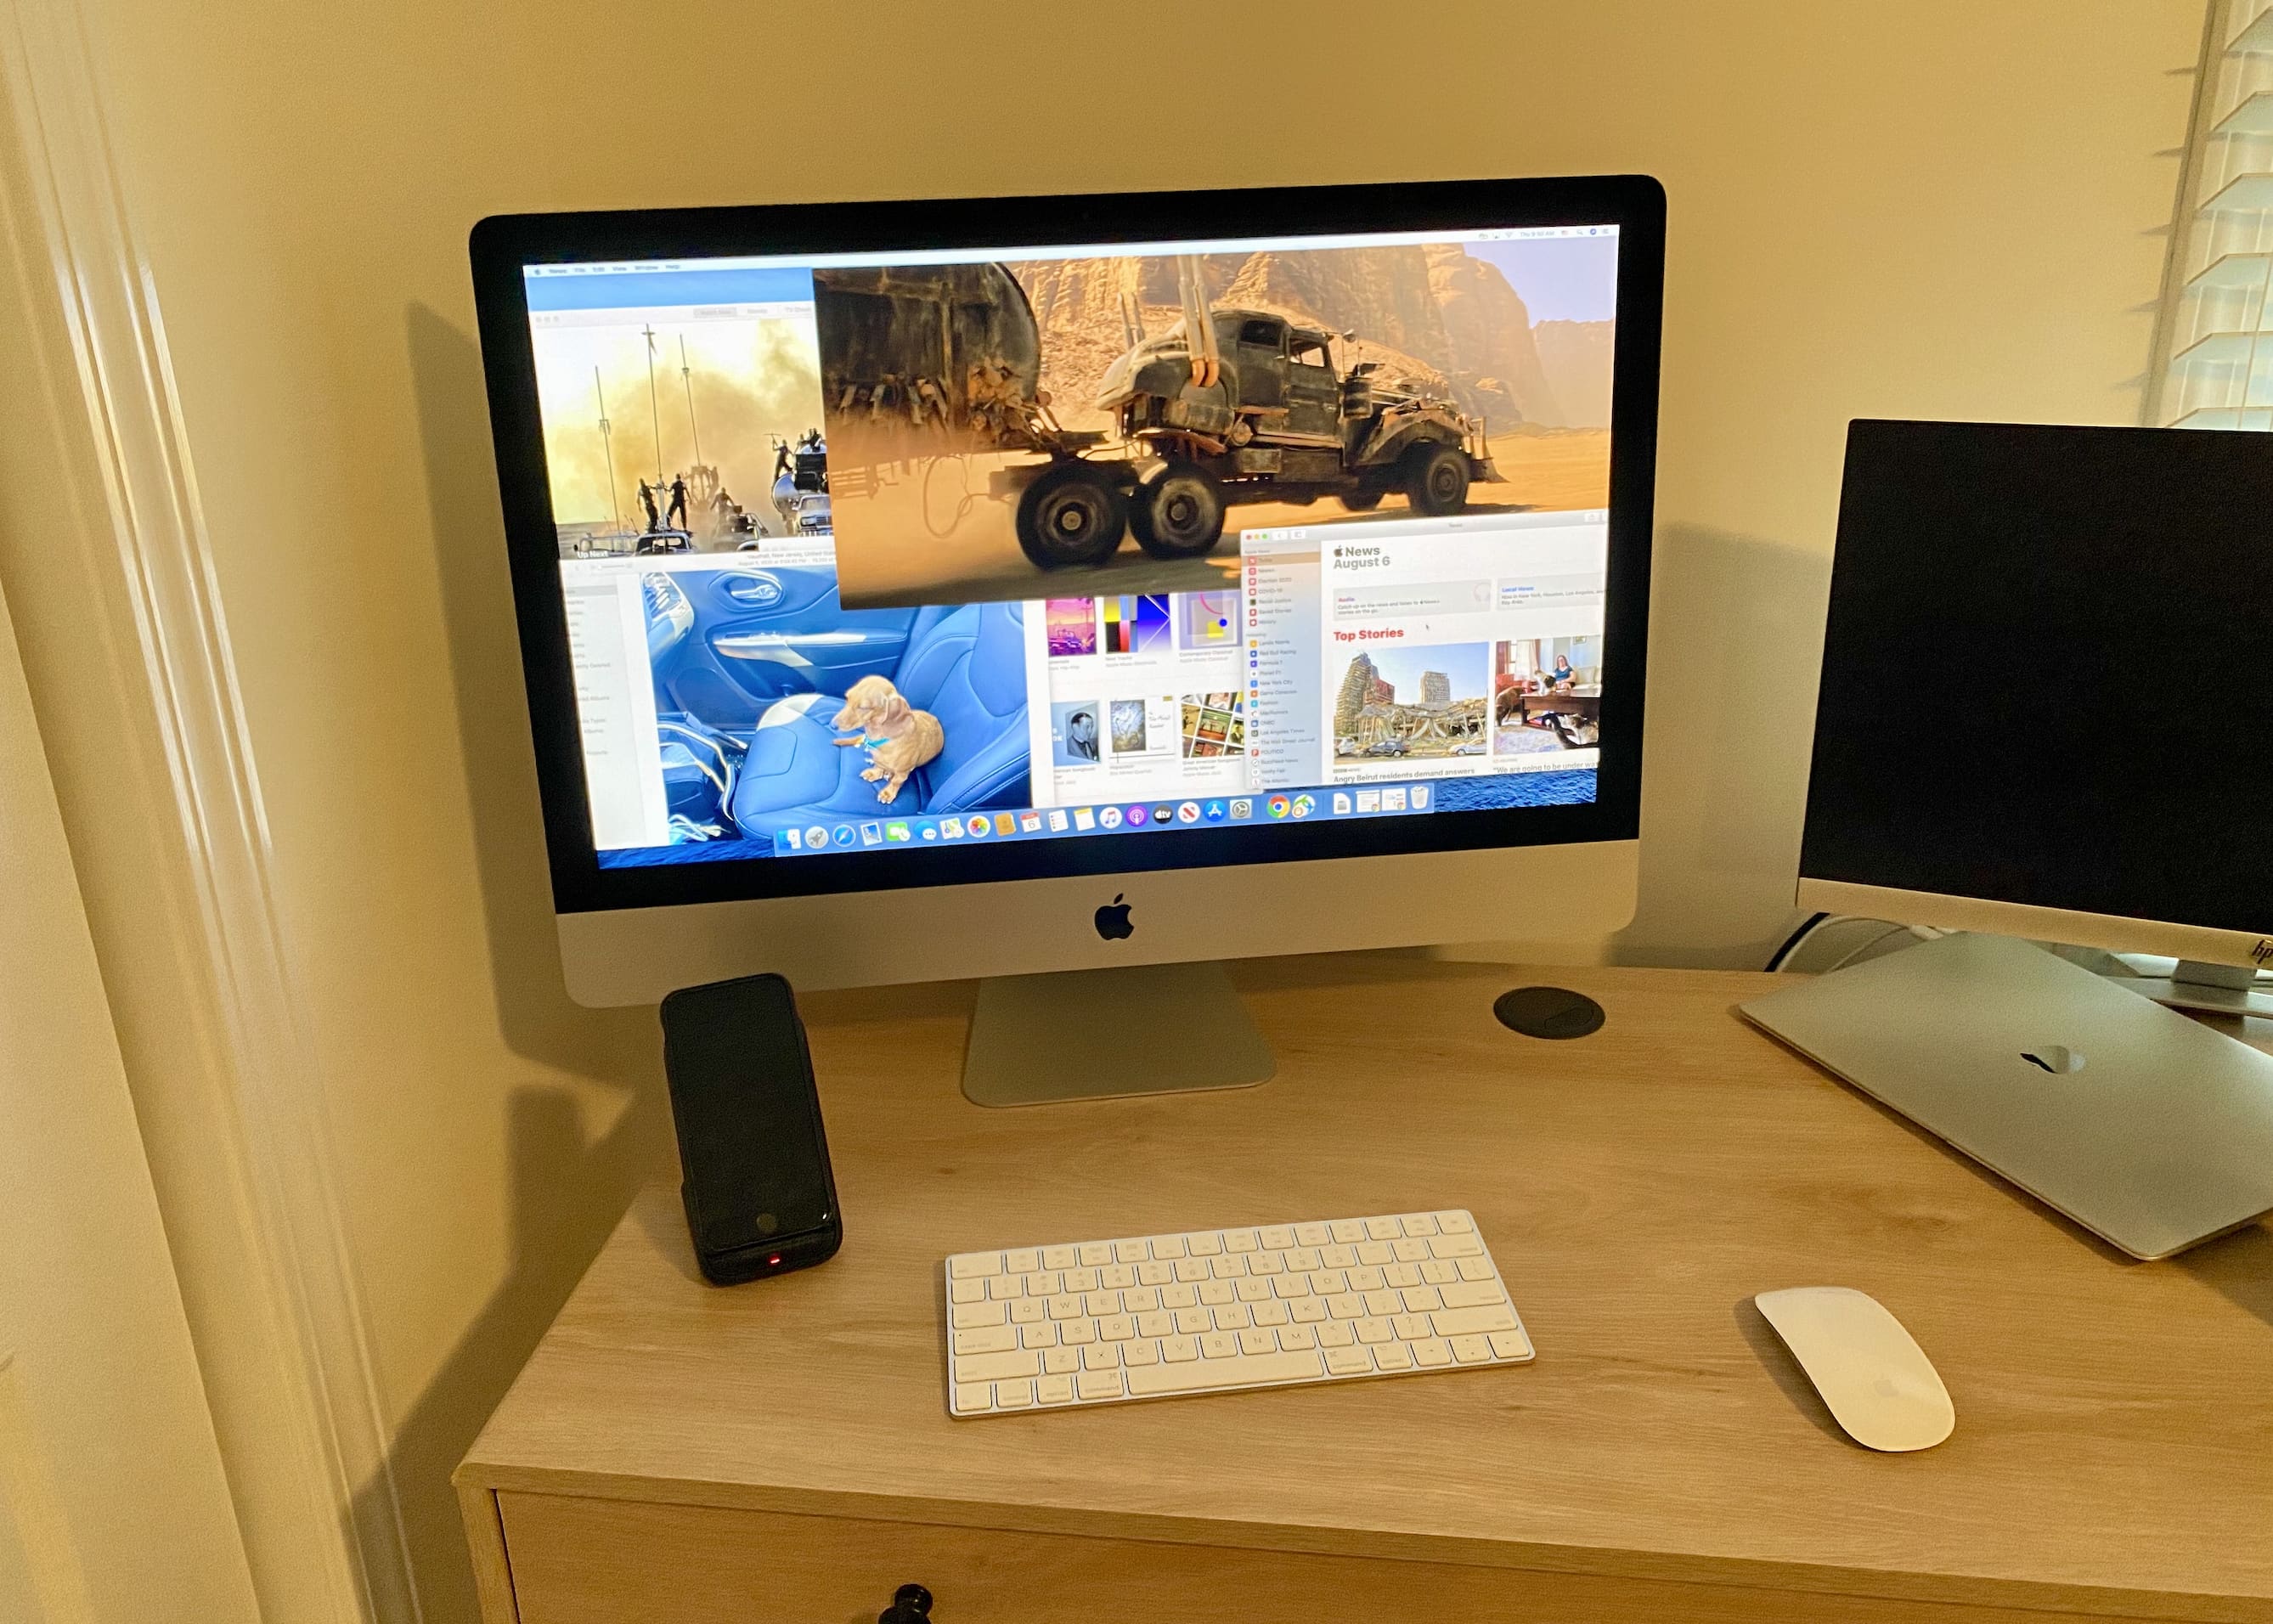 mac desktops for business